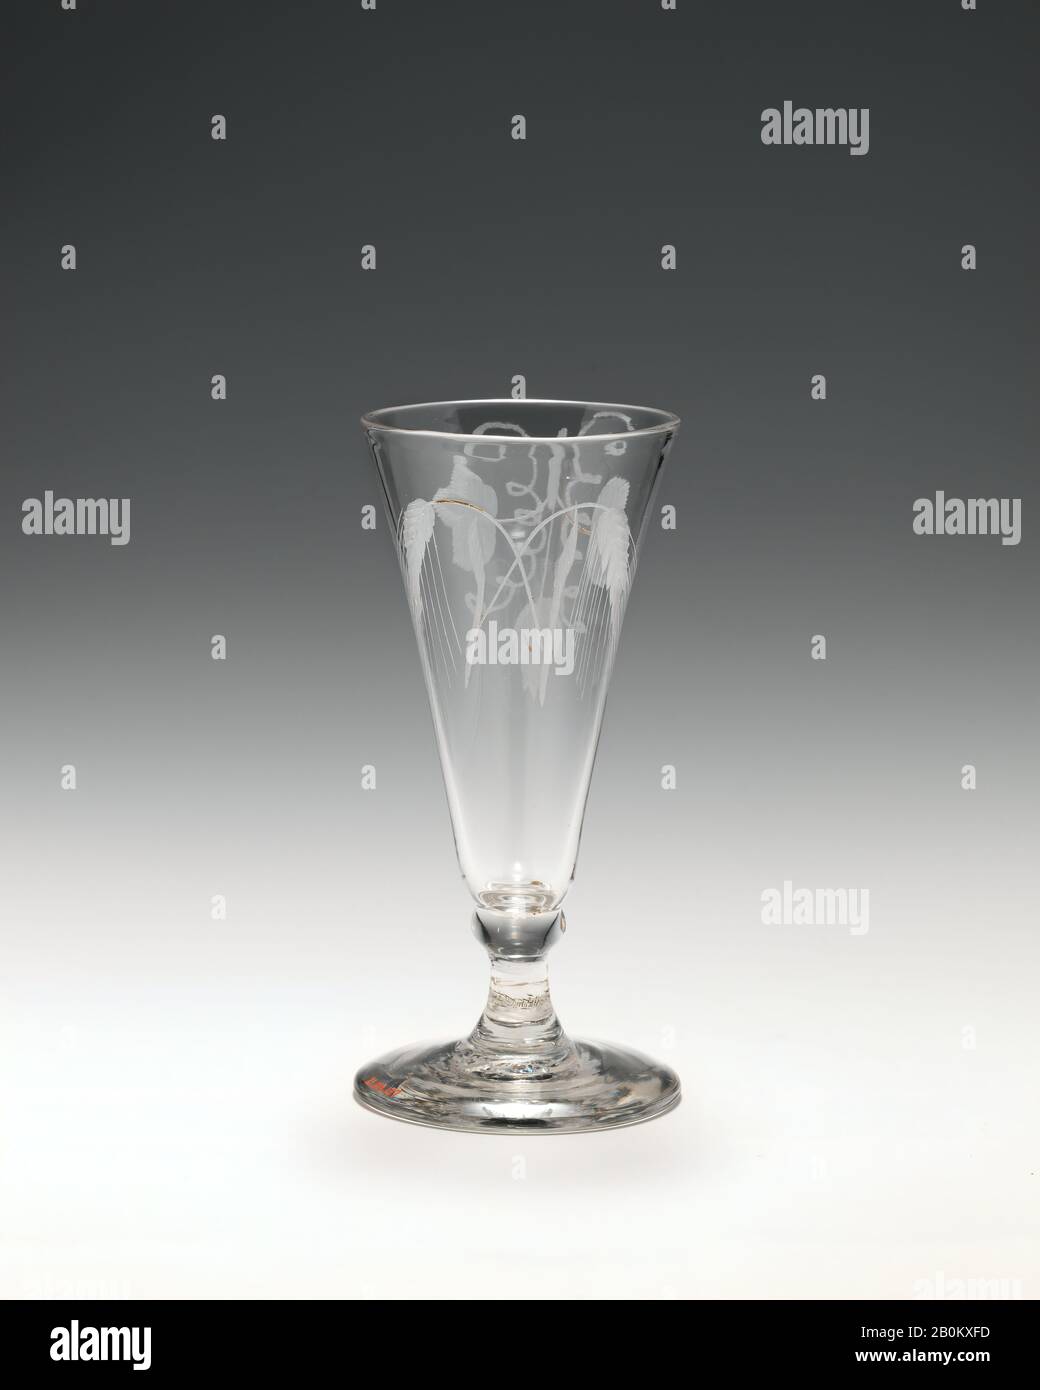 https://c8.alamy.com/comp/2B0KXFD/ale-glass-british-18th-century-british-glass-height-5-18-in-13-cm-glass-2B0KXFD.jpg